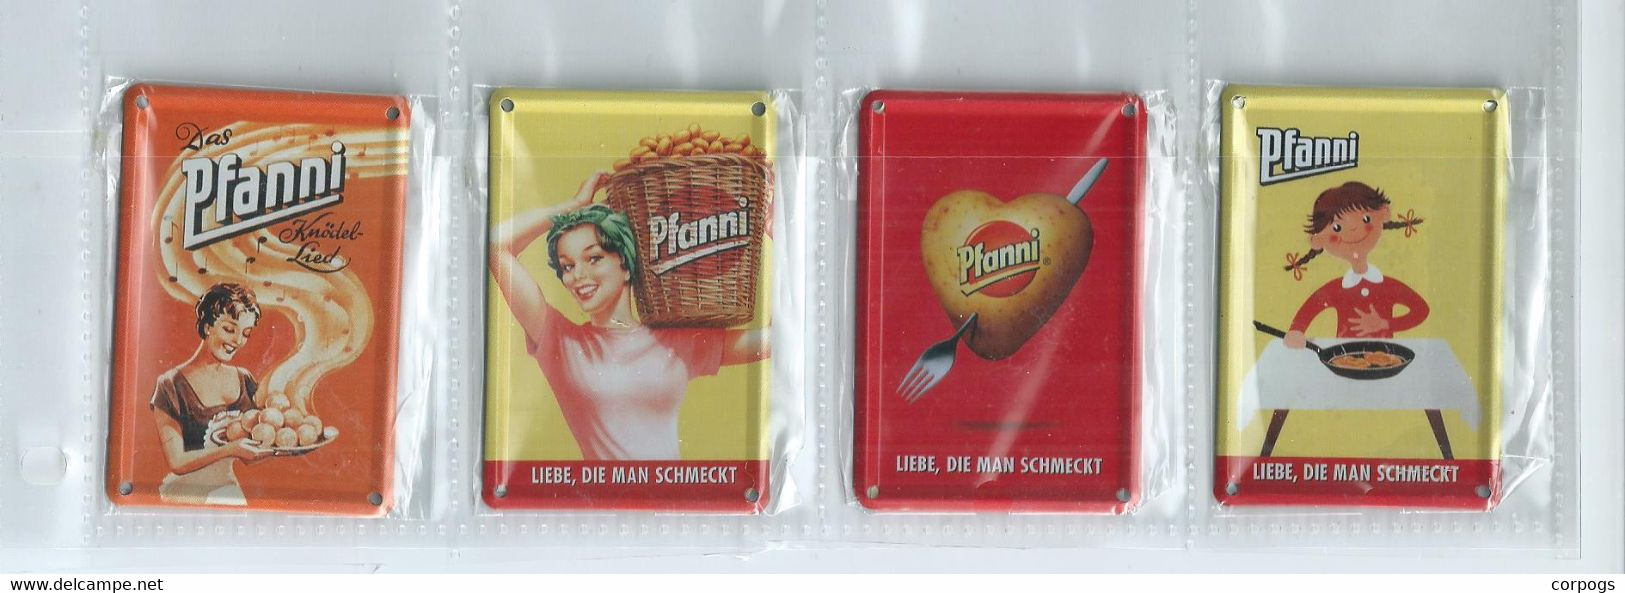 4 Duitse German Pfanni Magneten Magnets Aimant Like New Original Seal - Publicitaires